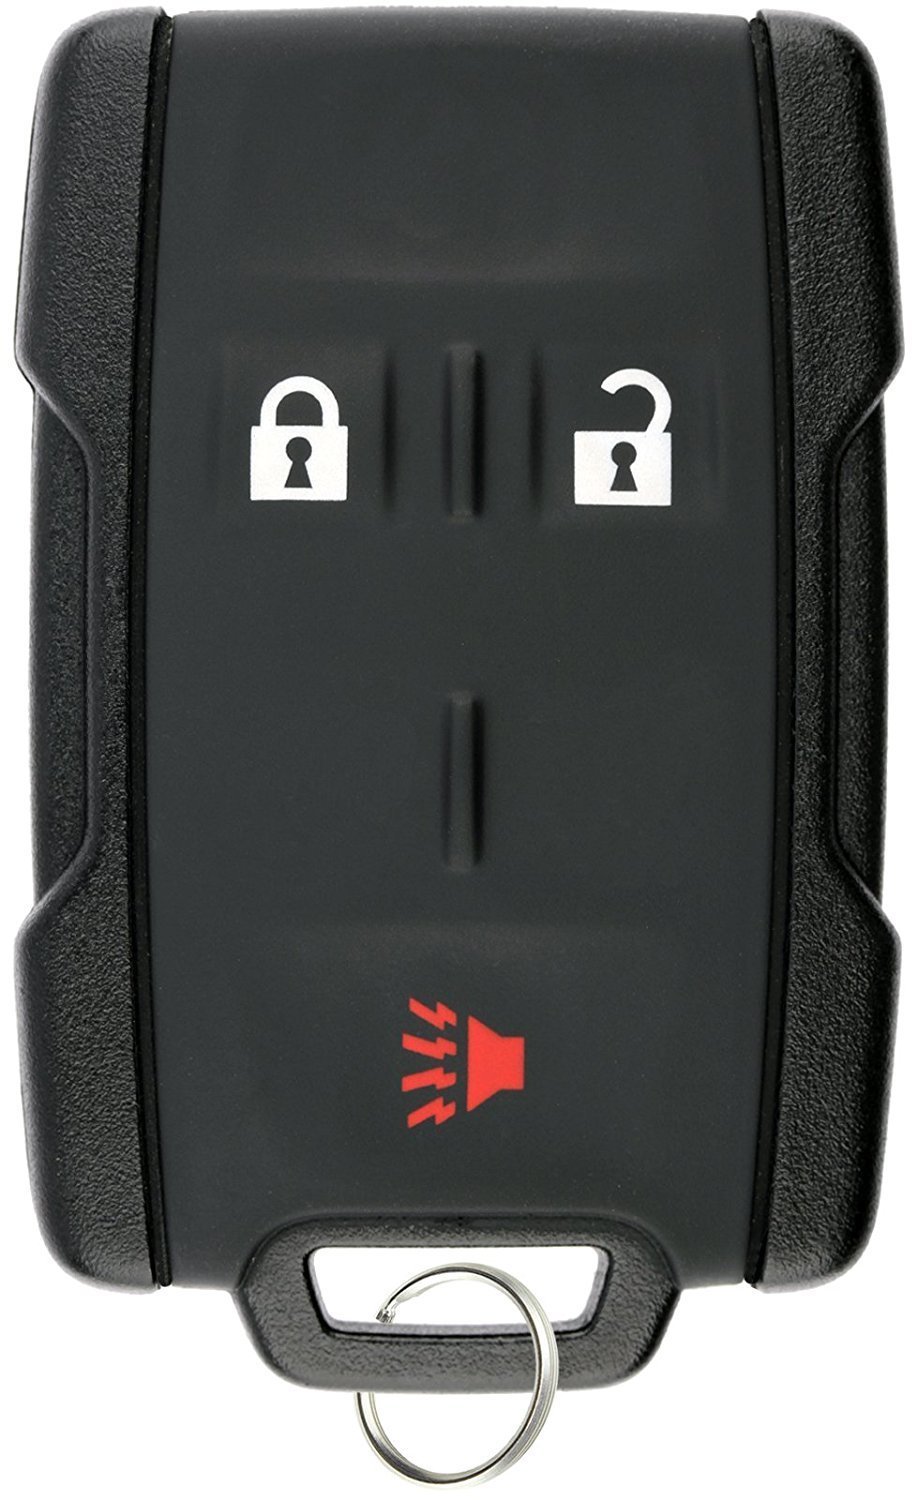 KeylessOption Keyless Entry Remote Car Key Fob Alarm for Chevy Colorado Silverado GMC Canyon Sierra M3N-32337100 von KeylessOption